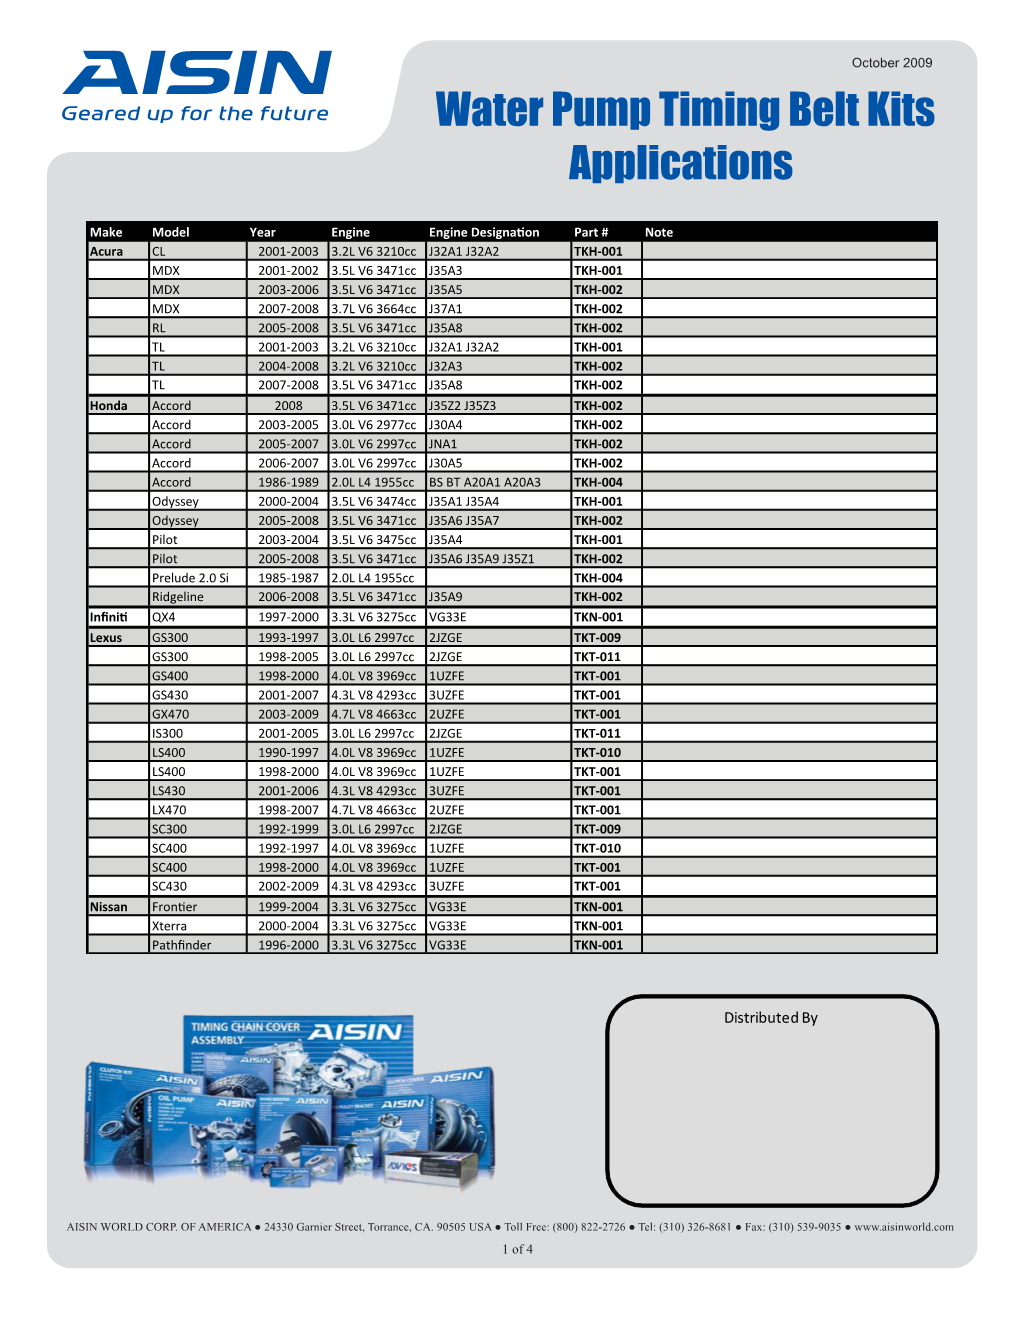 Water Pump Timing Belt Kits Applications